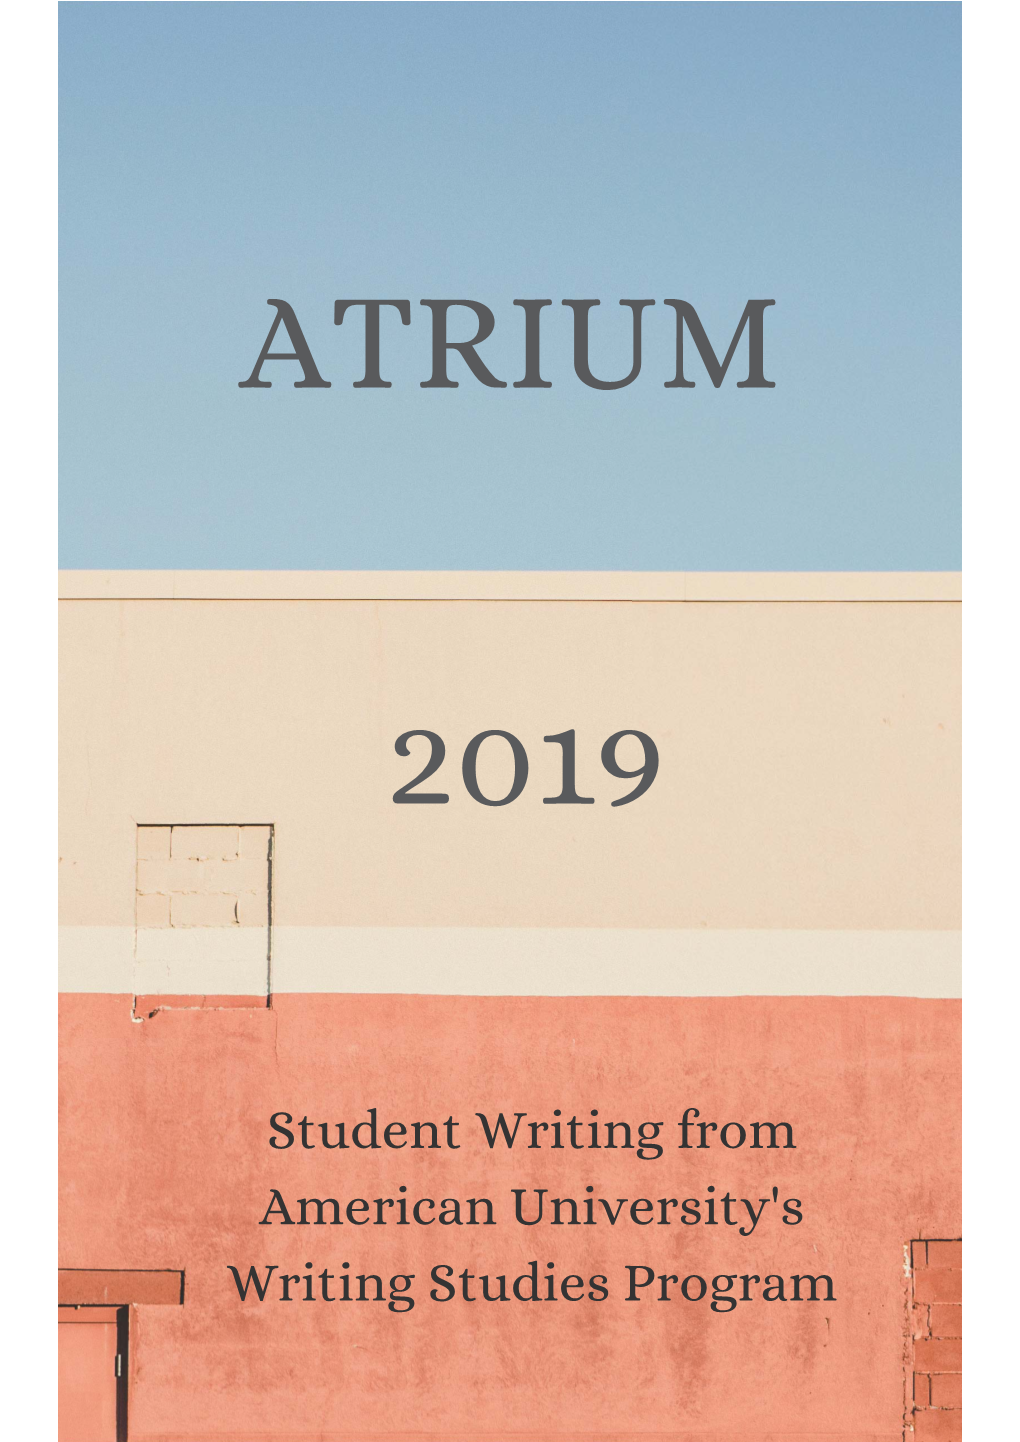 Student Writing from American University's Writing Studies Program